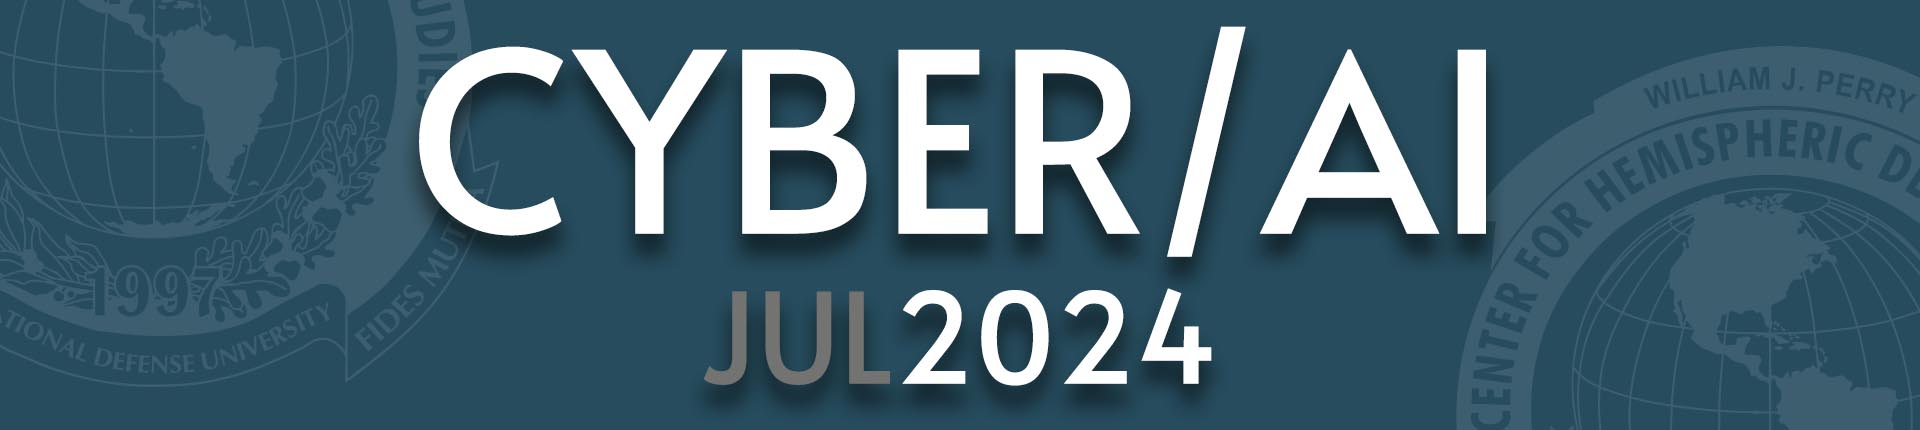 CYBER/AI 2024